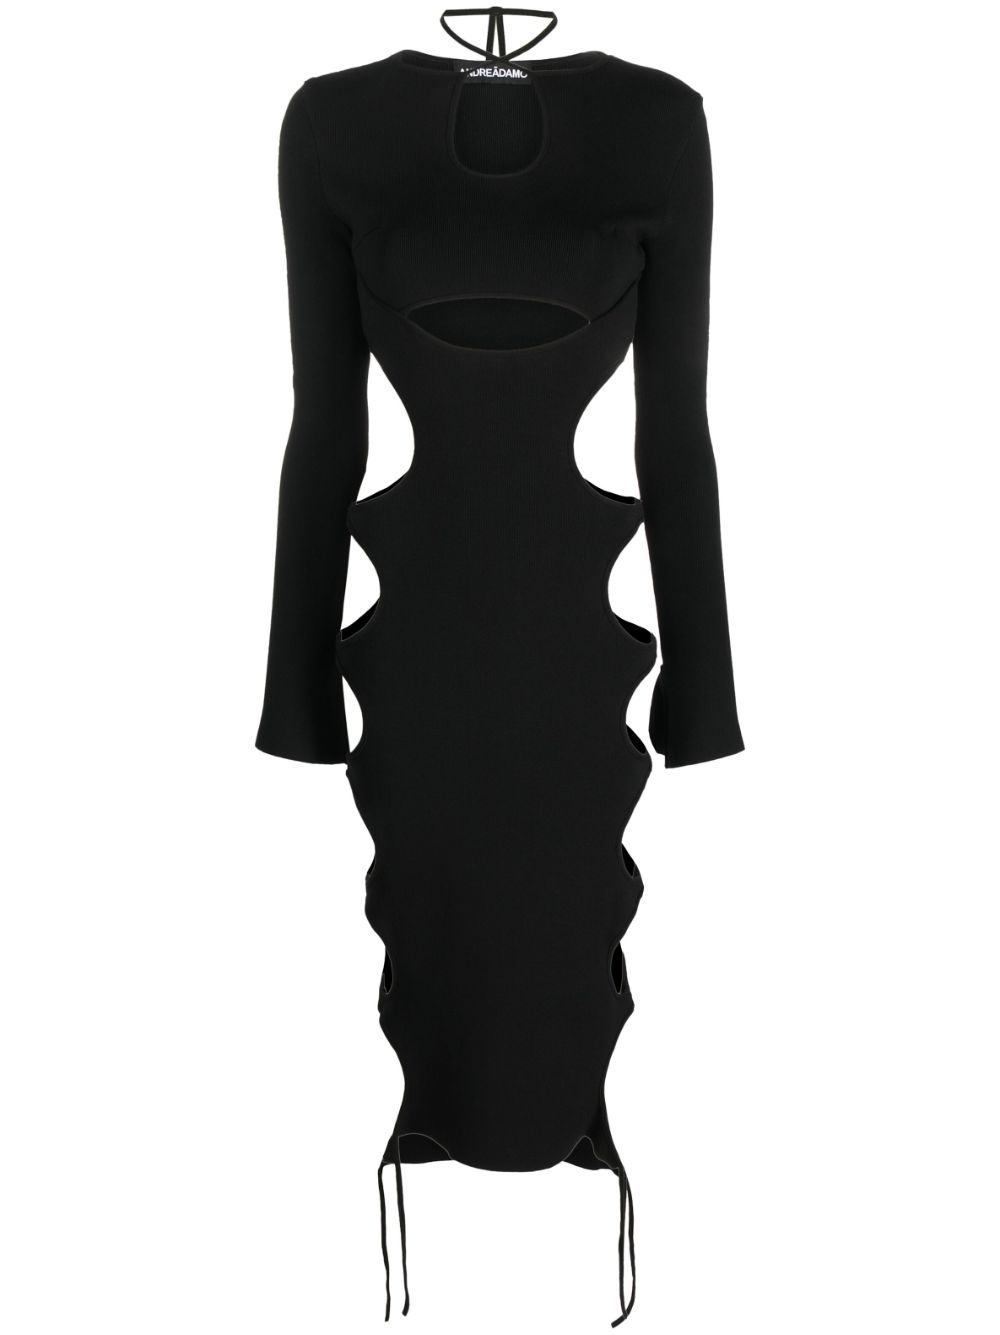 ANDREĀDAMO cut-out long-sleeve dress - Black von ANDREĀDAMO